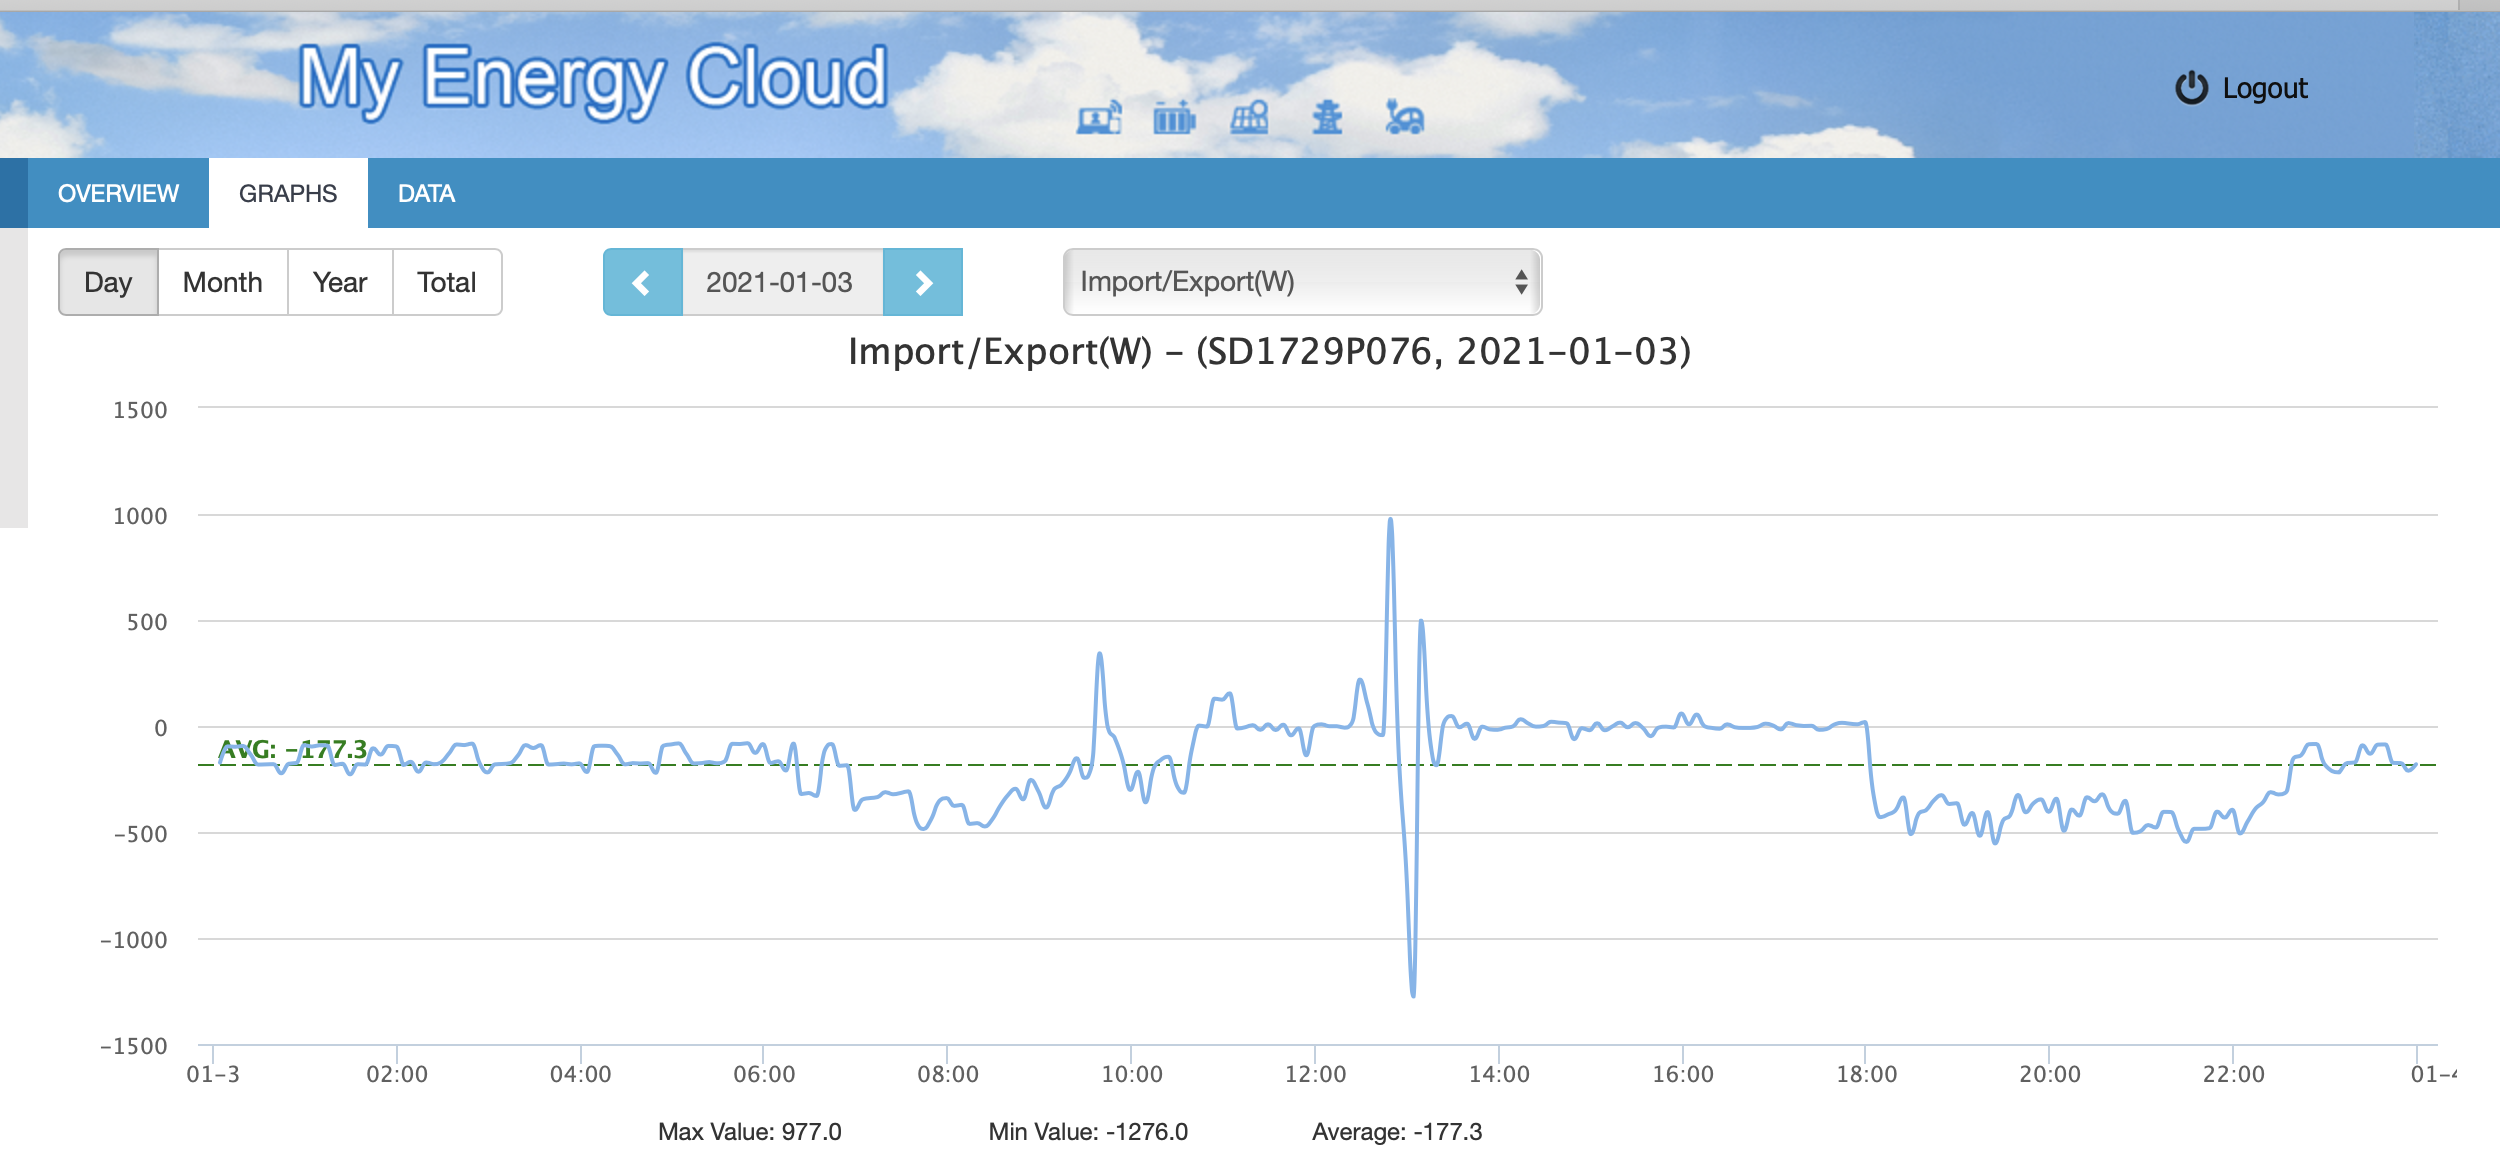 My Energy Cloud data capture